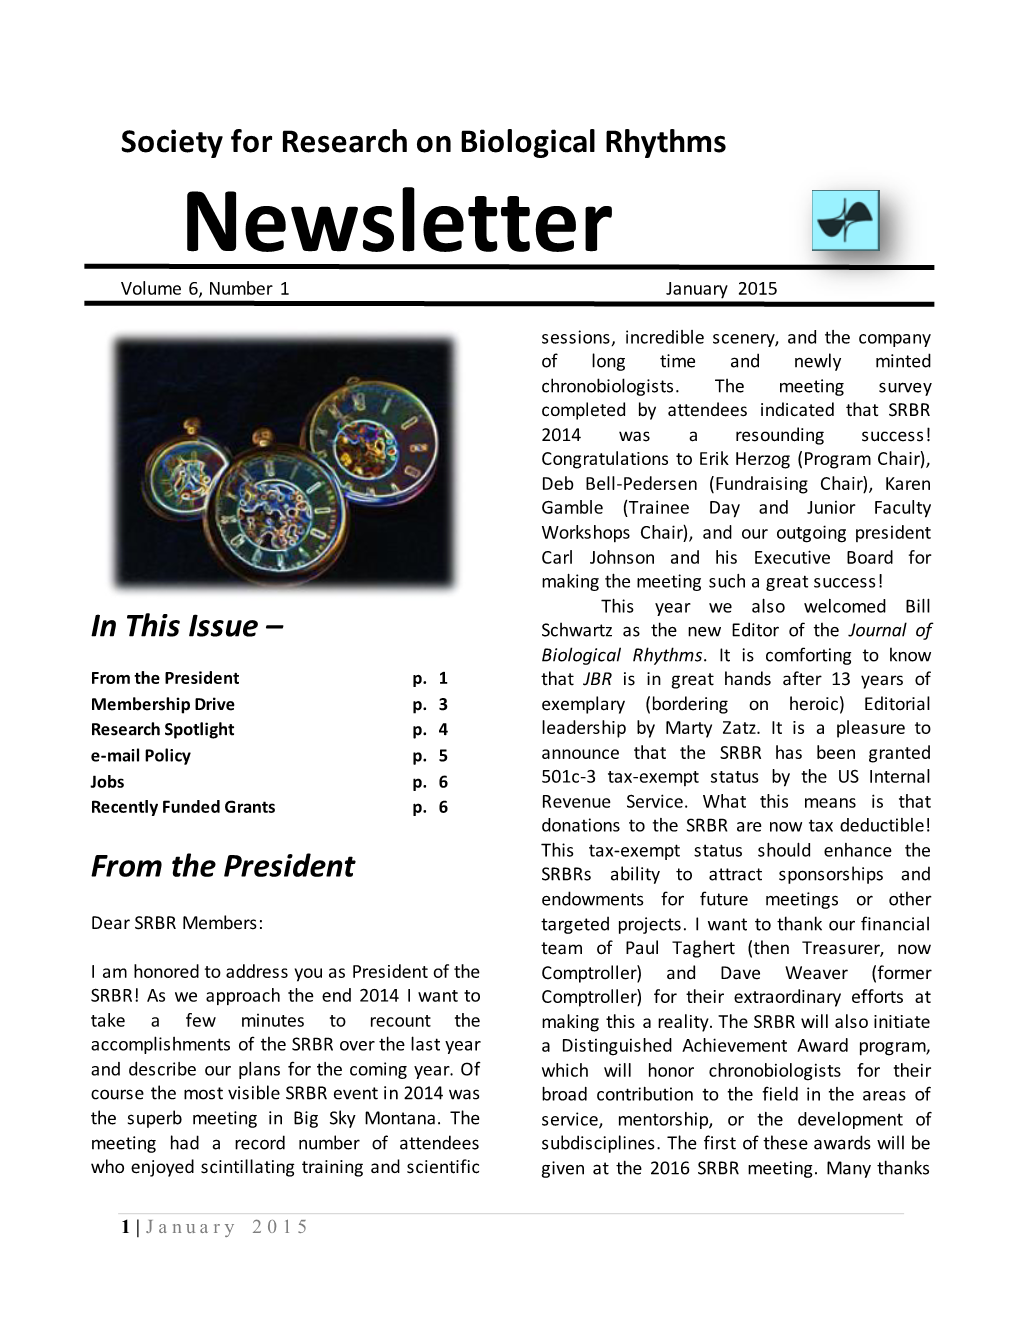 Newsletter Volume 6, Number 1 January 2015